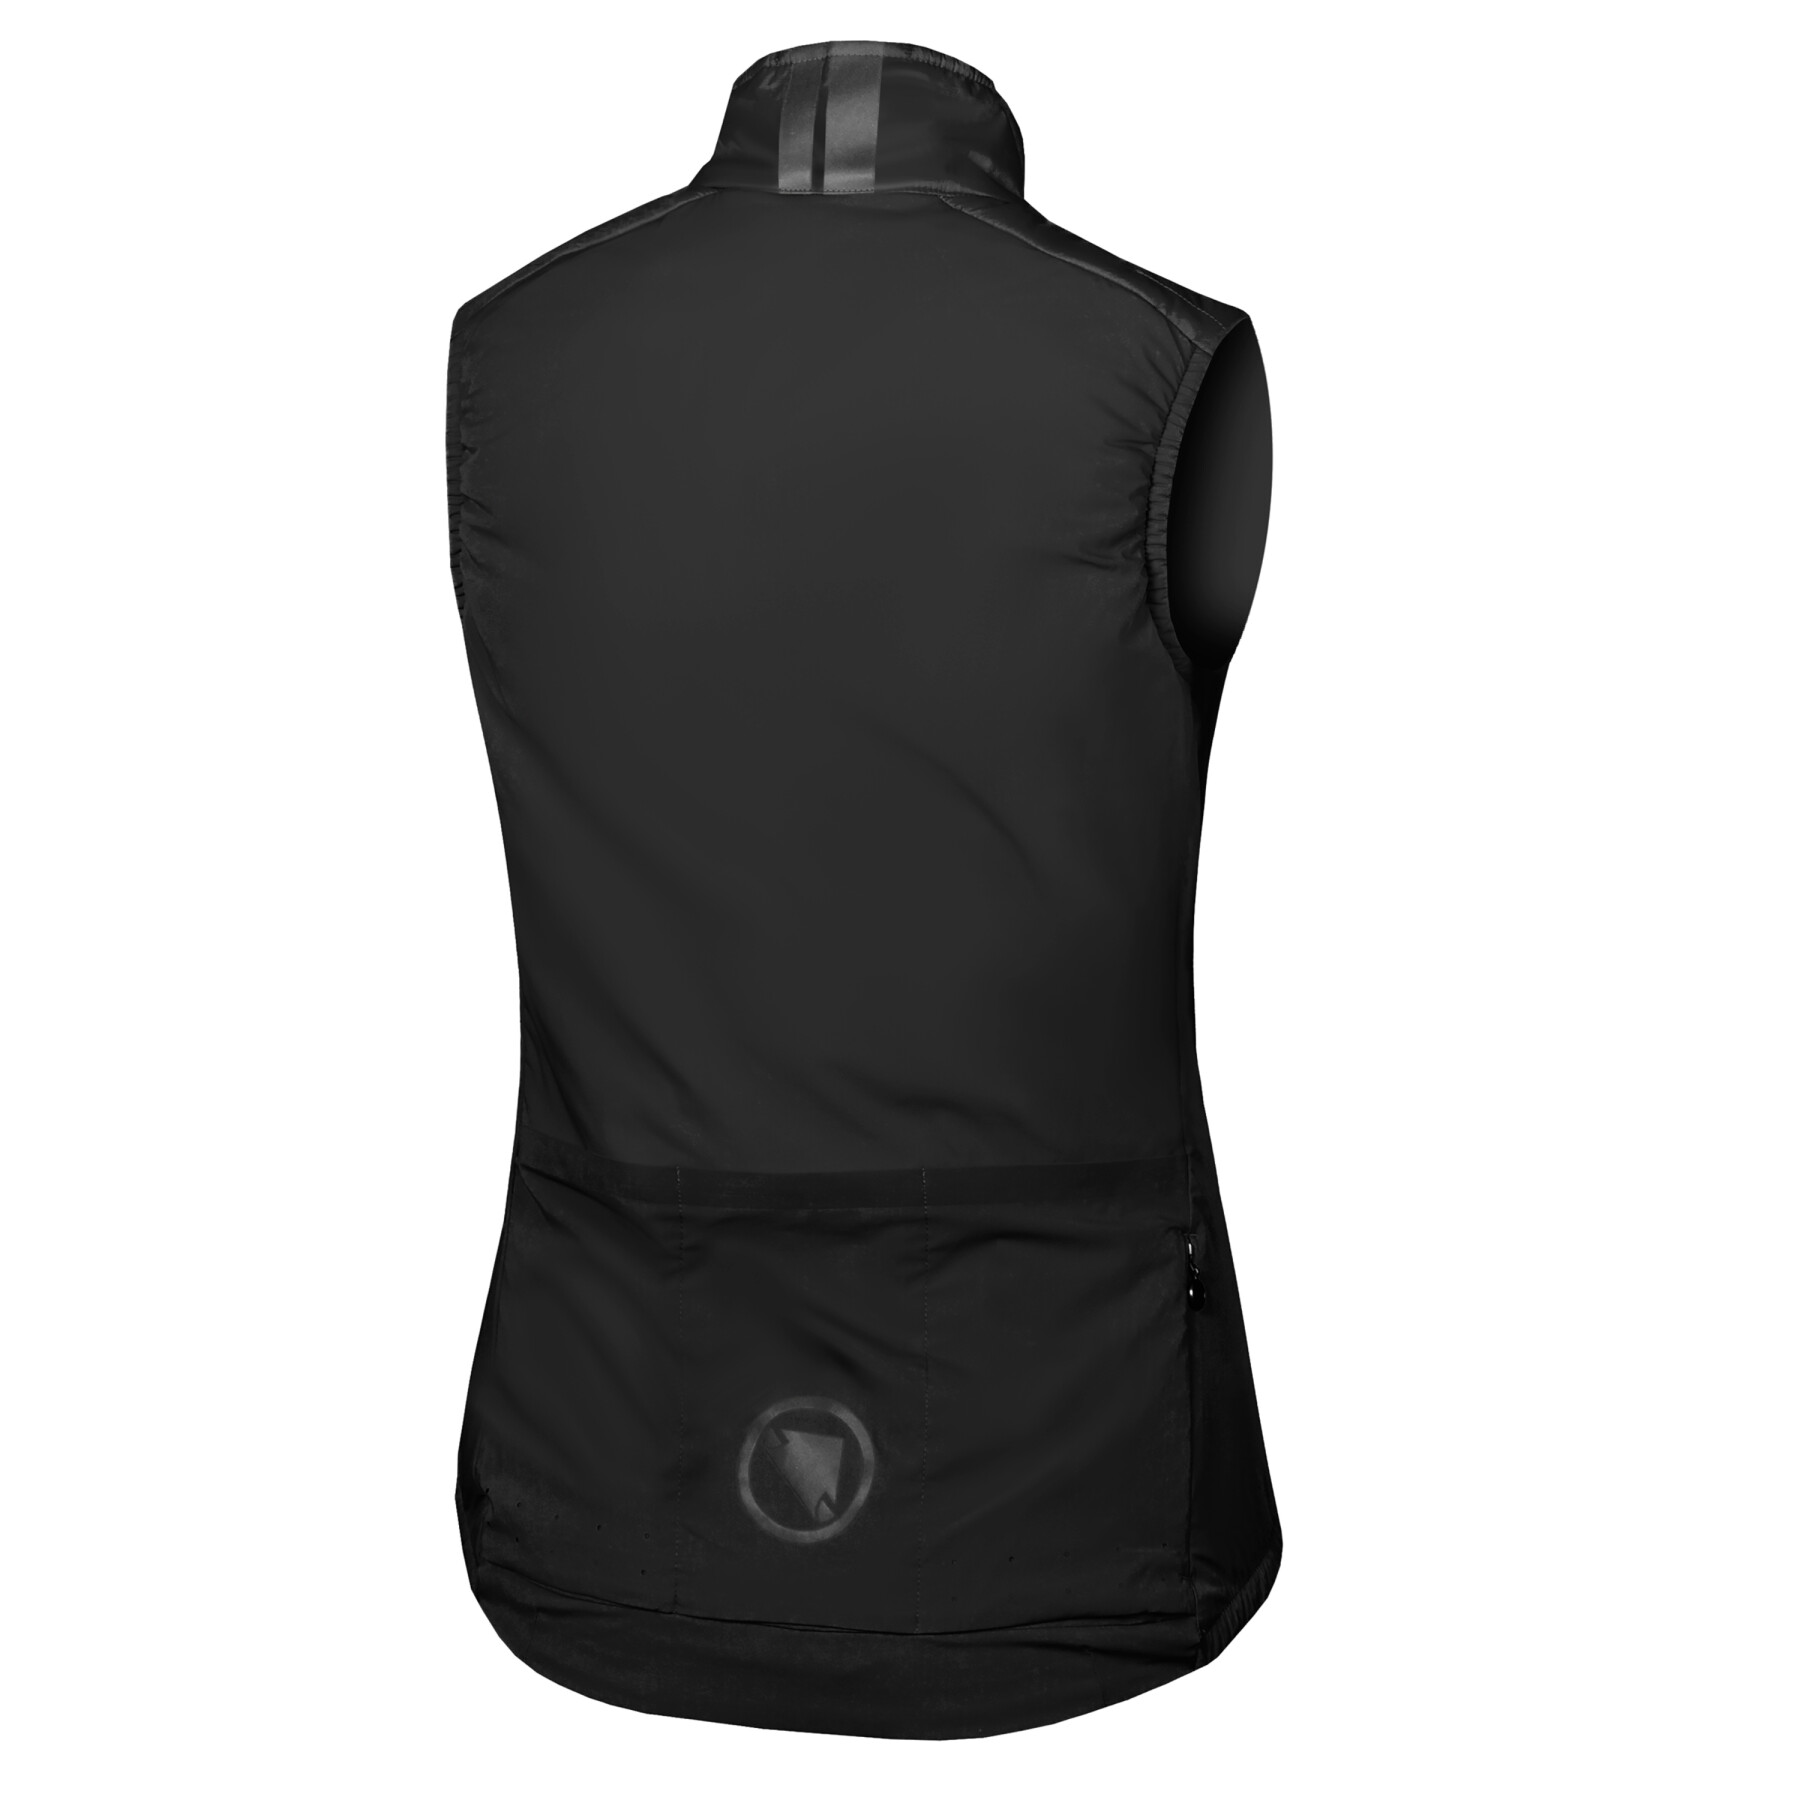 Women's vest Endura Pro SL Primaloft®